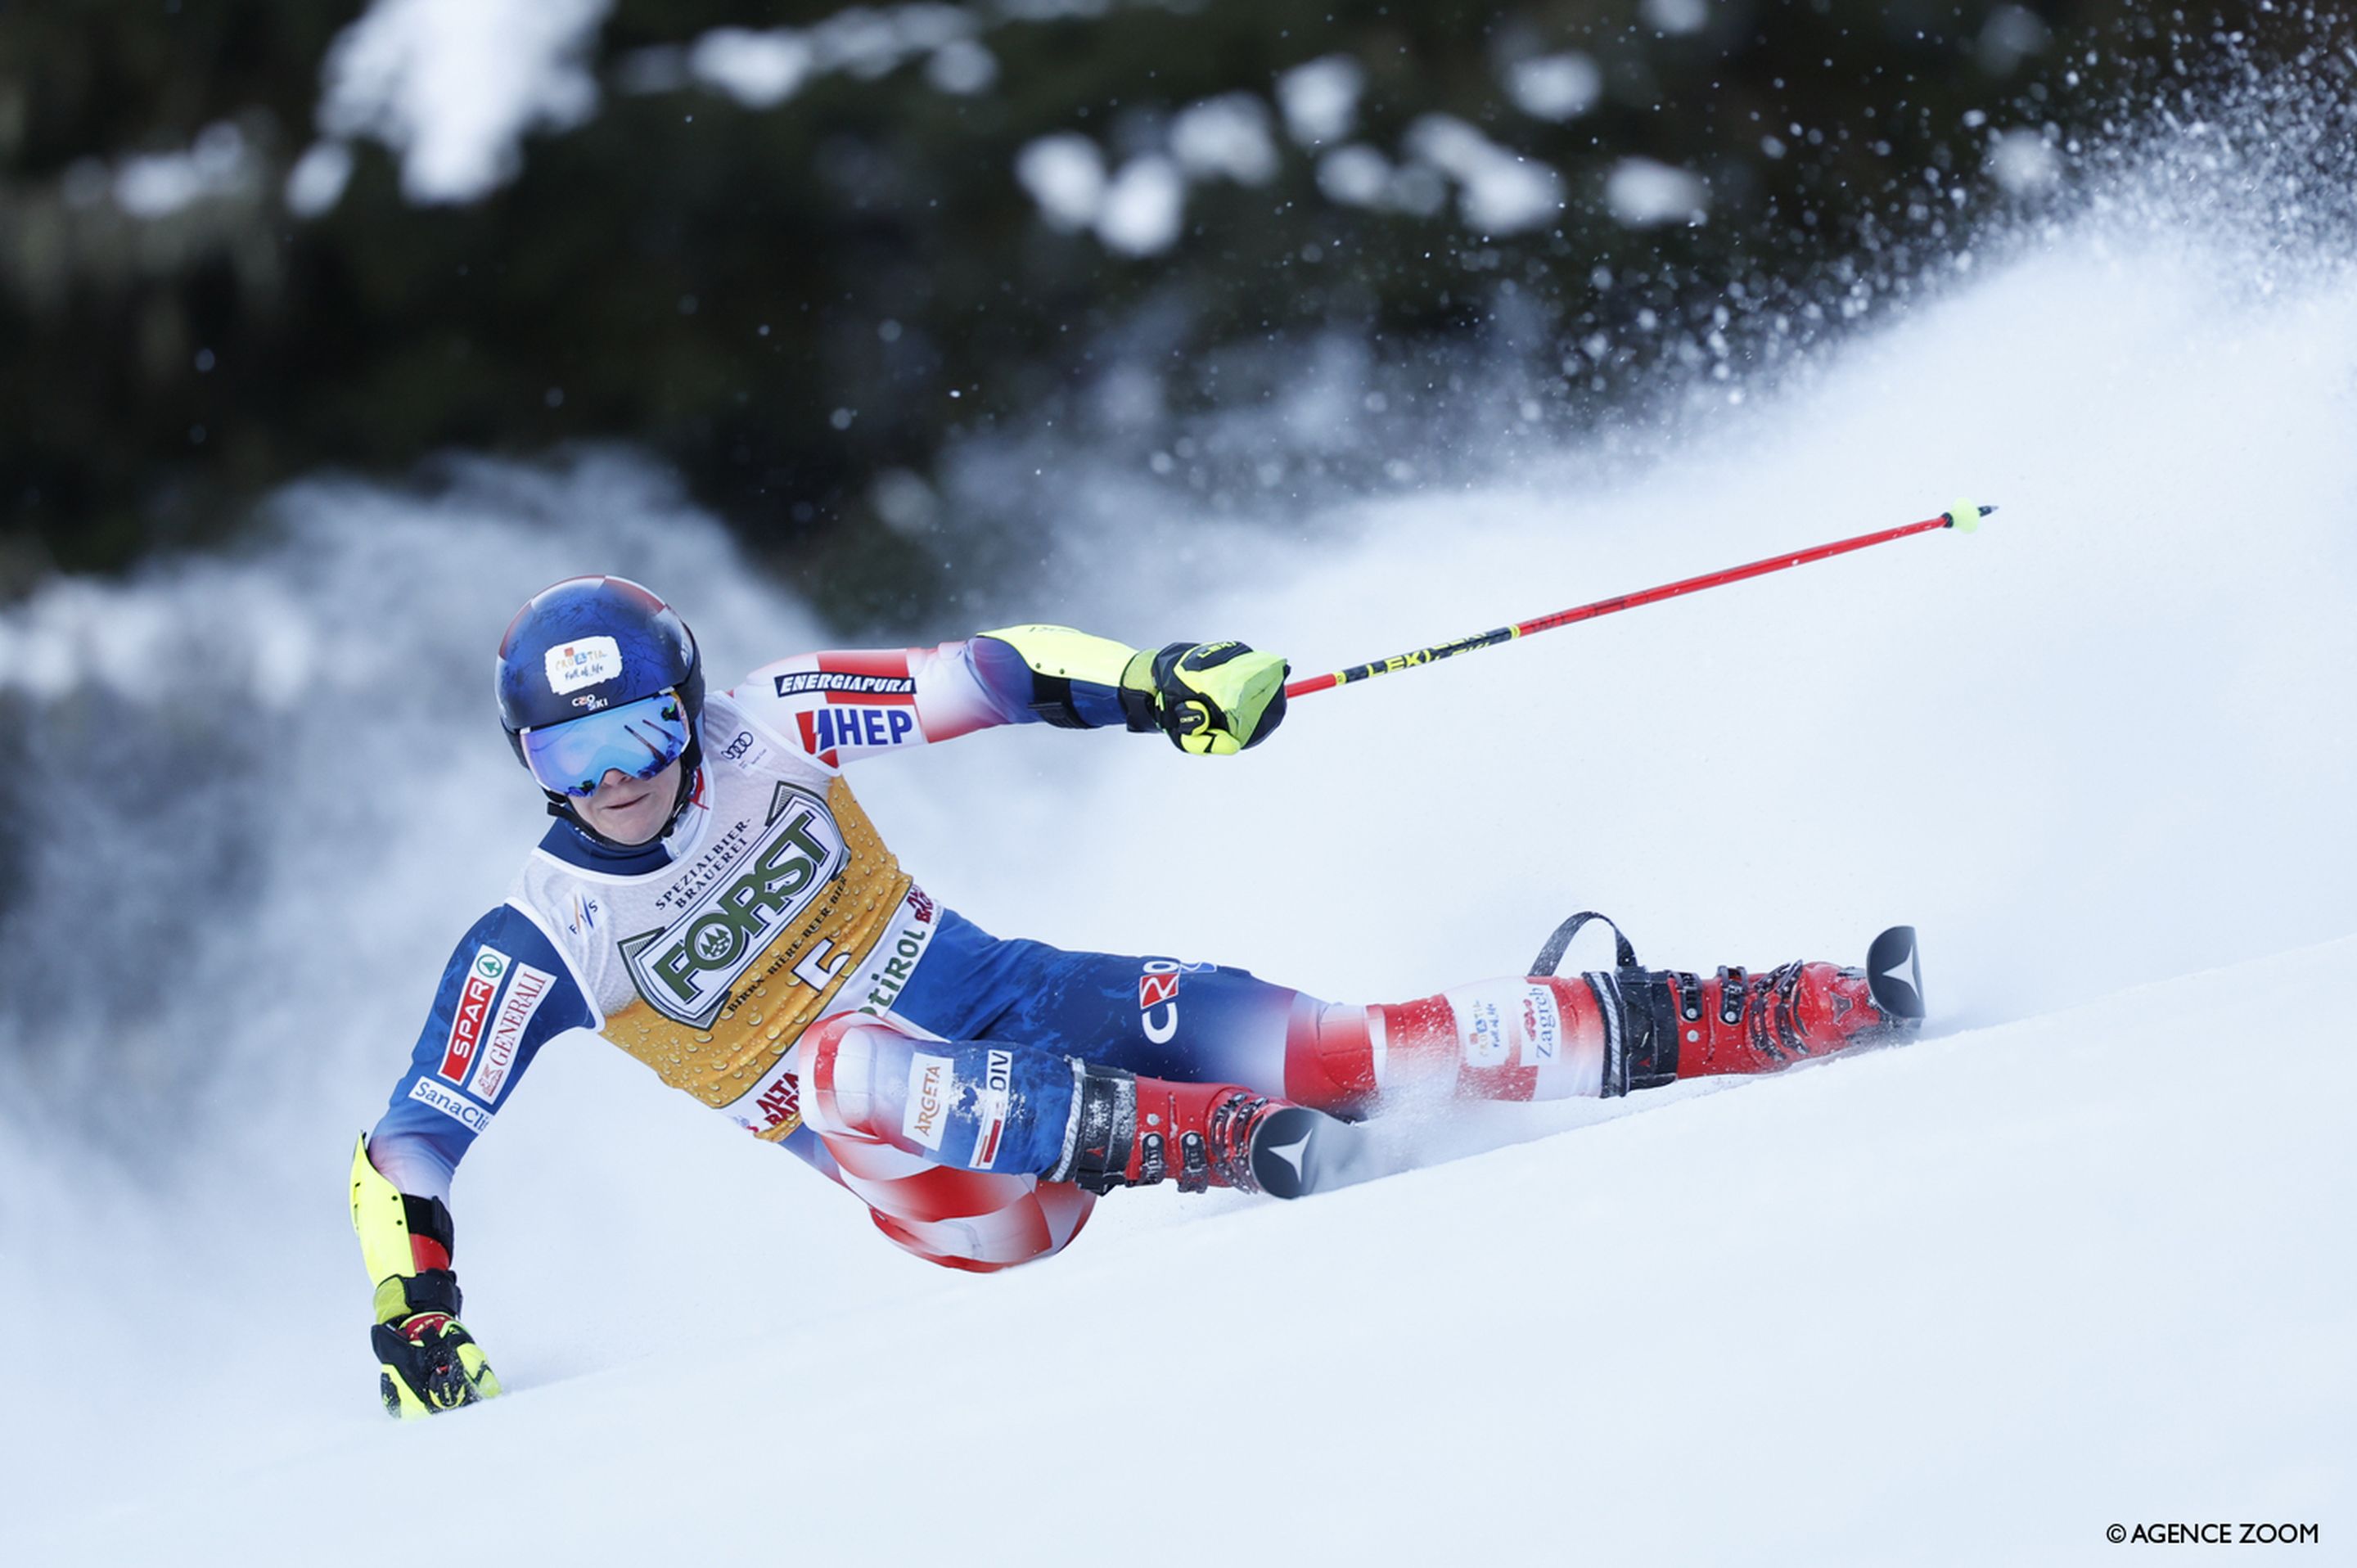 Zubcic said he skied his second run like a "maniac" (Agence Zoom)